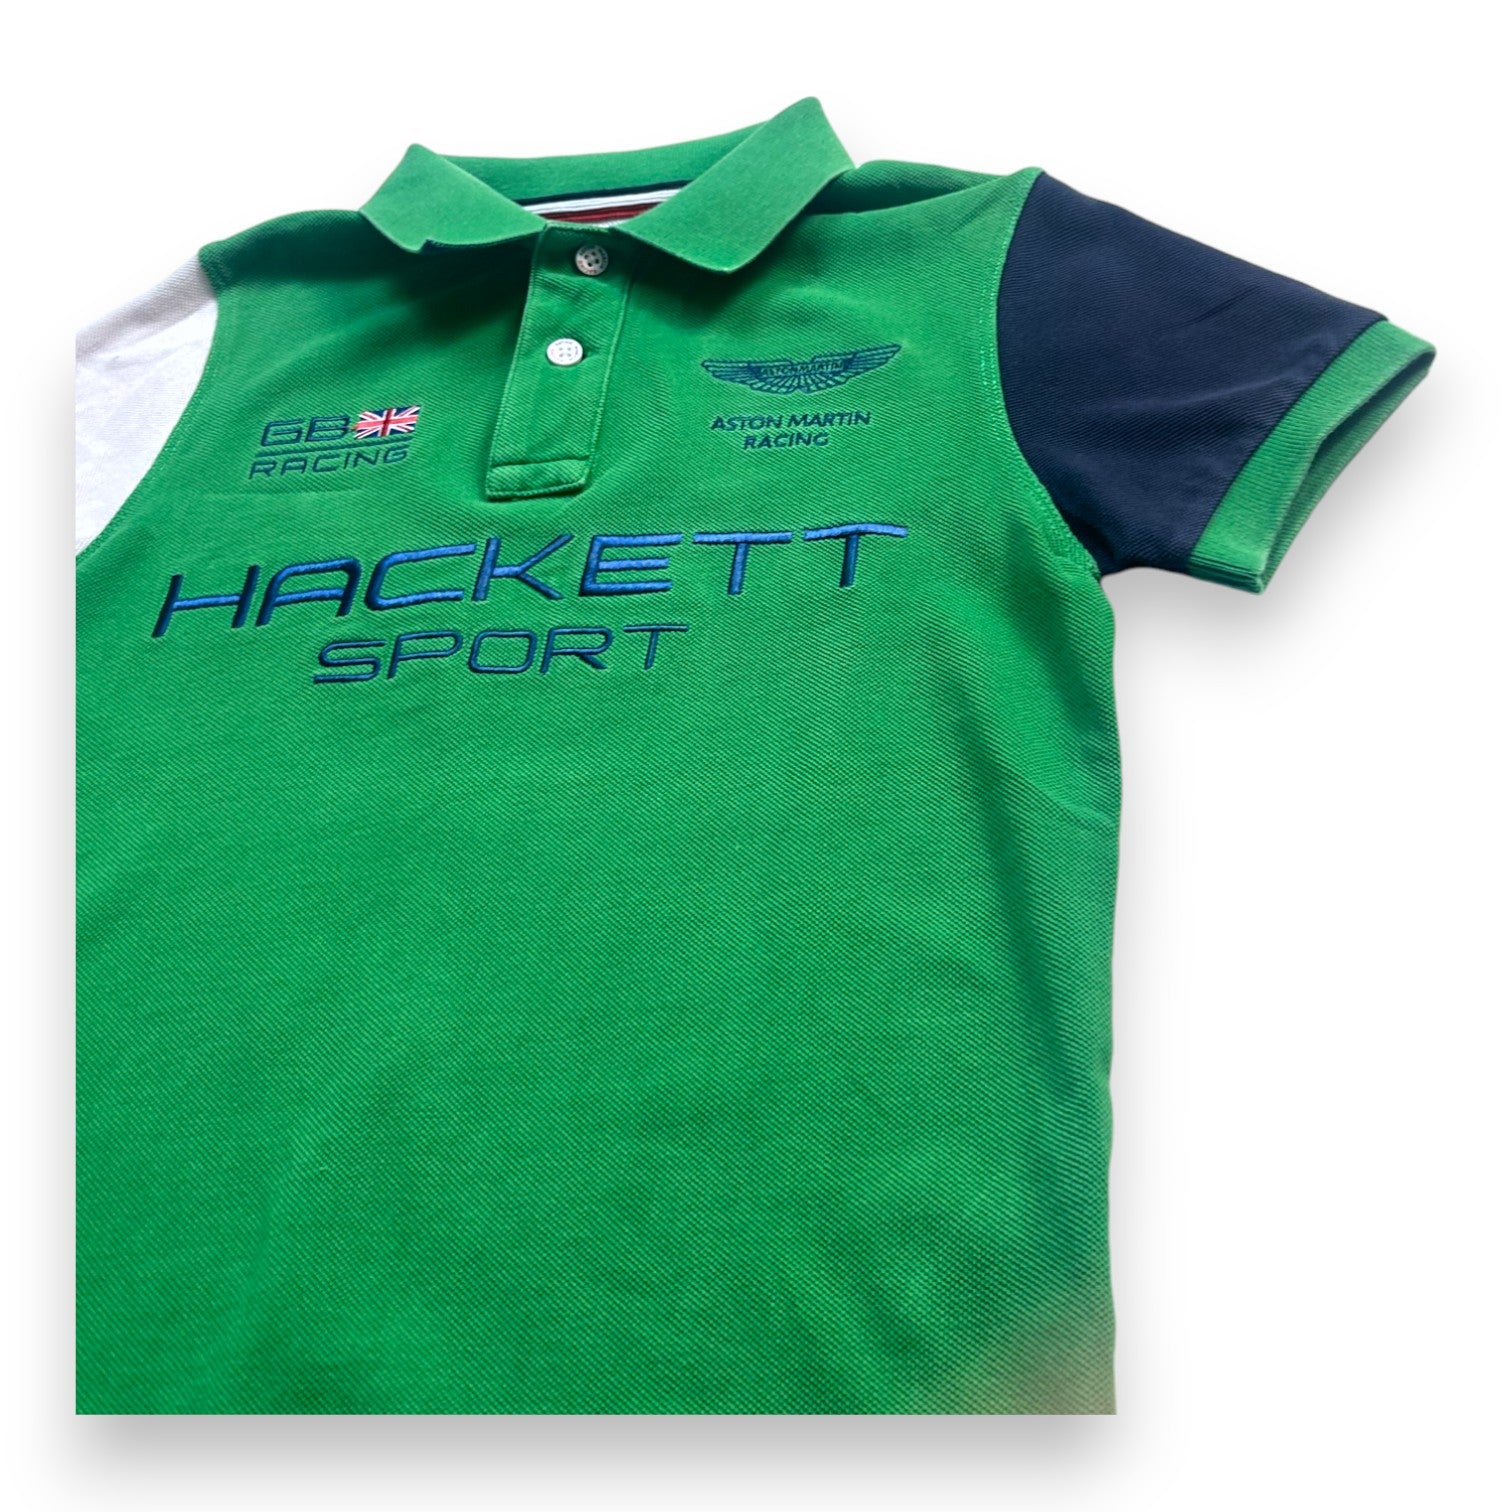 HACKETT - Polo vert - 7/8 ans